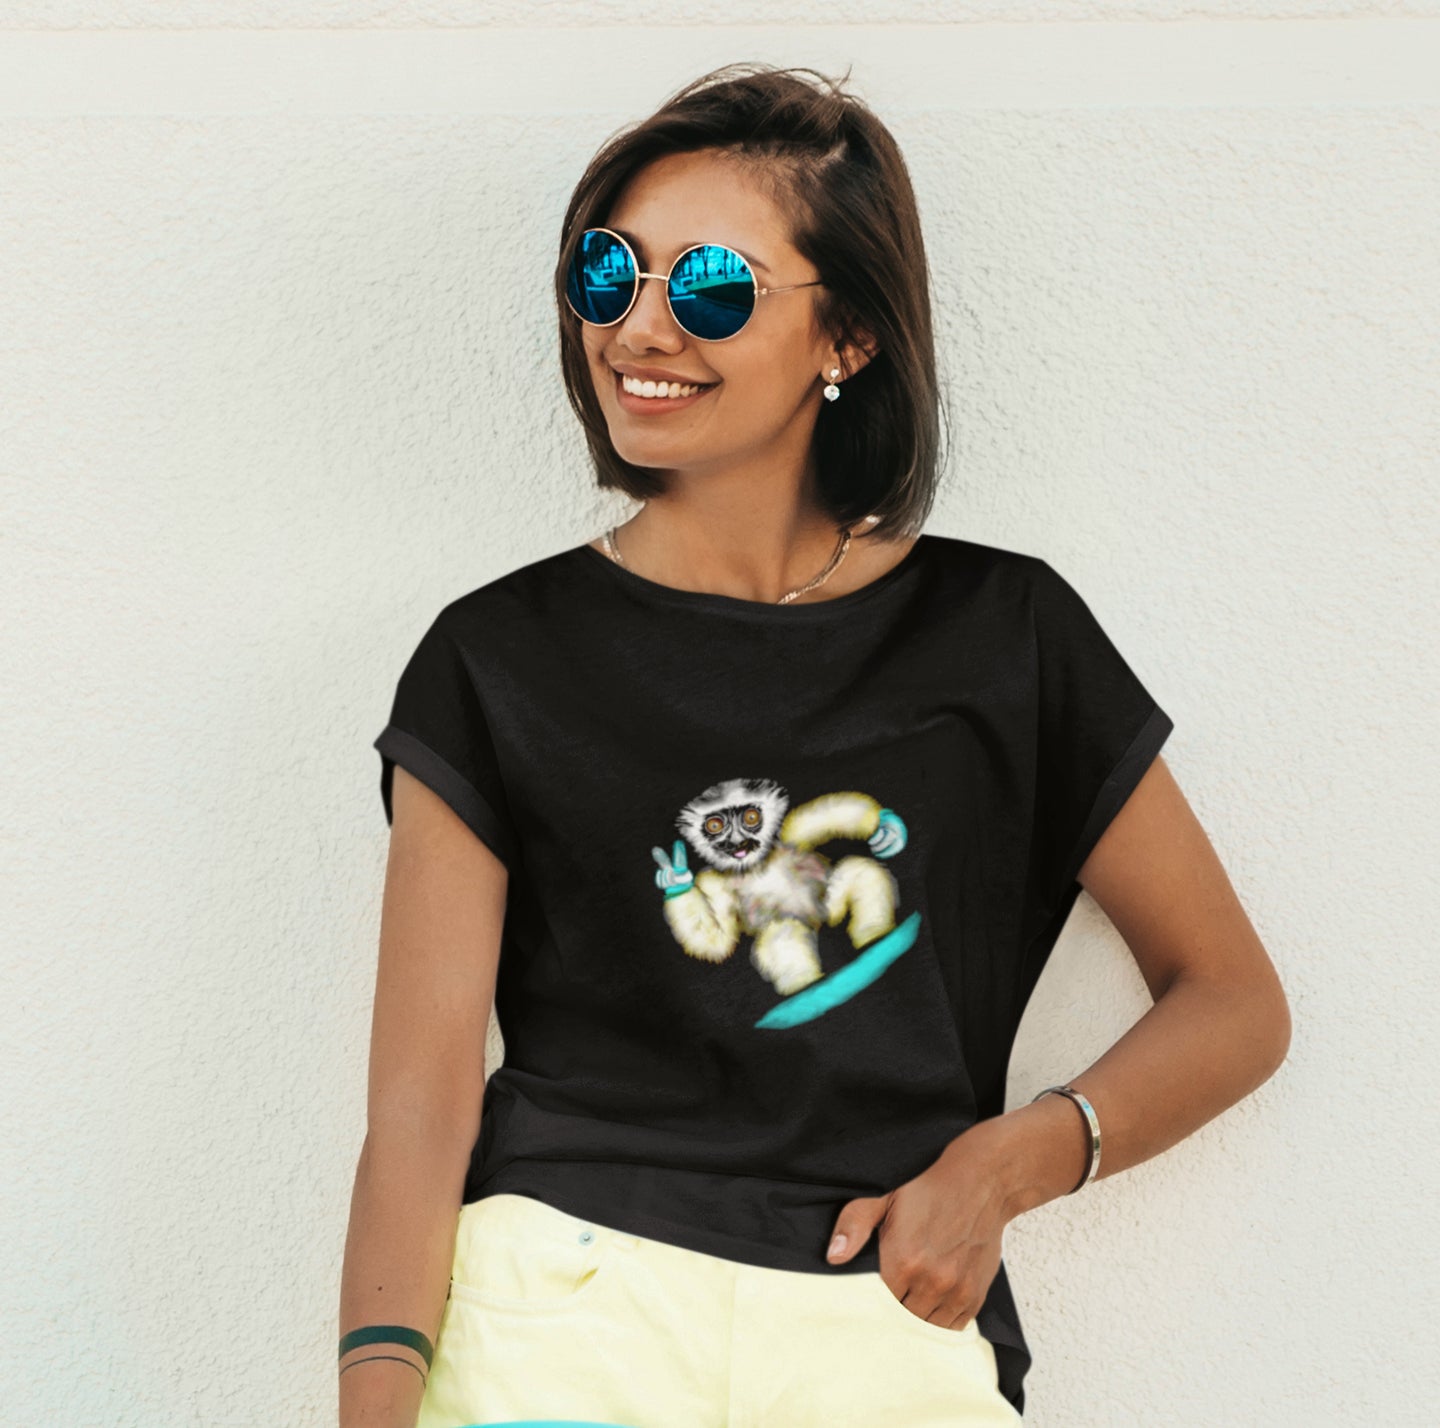 Lemur Snowboarder | Women's 100% Organic Cotton T Shirt worn by a woman